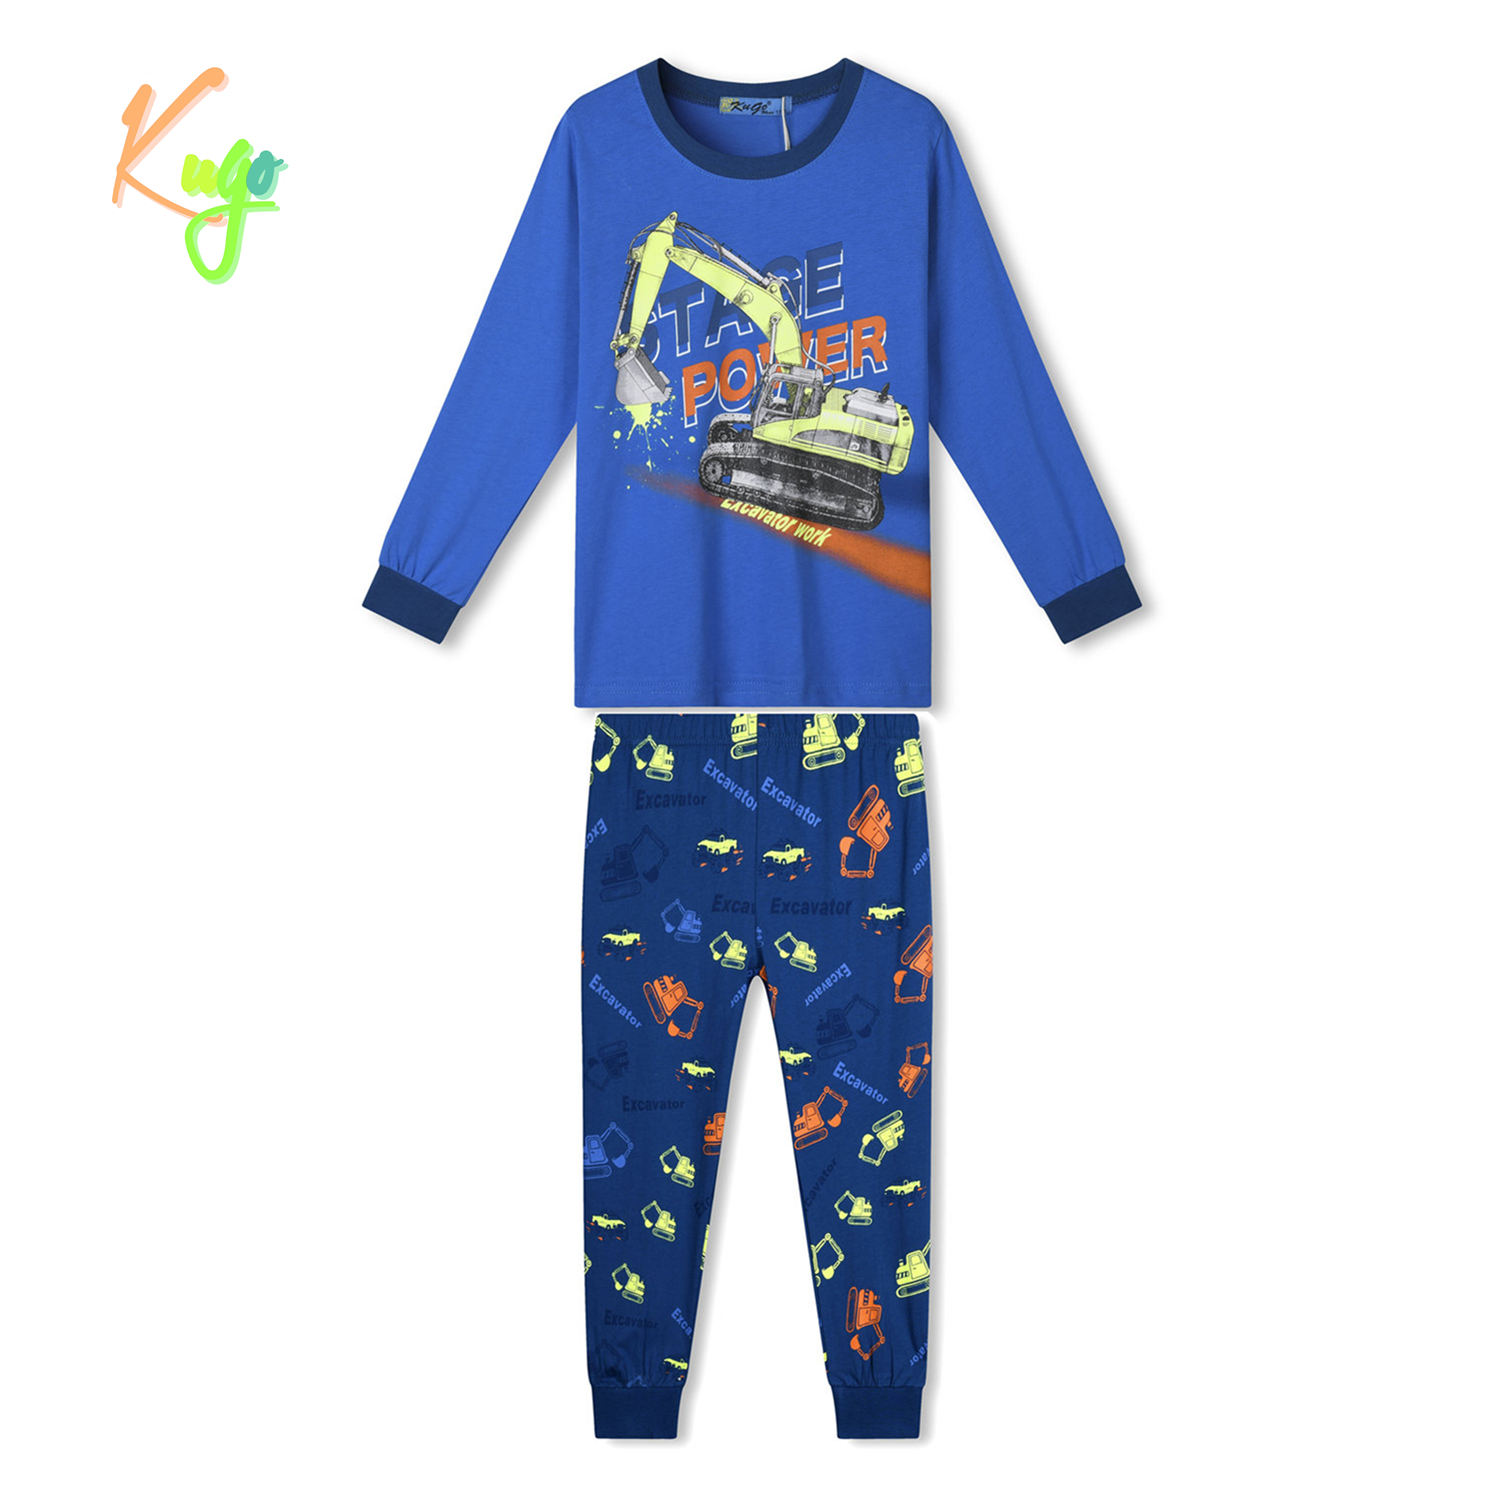 Chlapecké pyžamo - KUGO MP1370, petrol Barva: Petrol, Velikost: 98